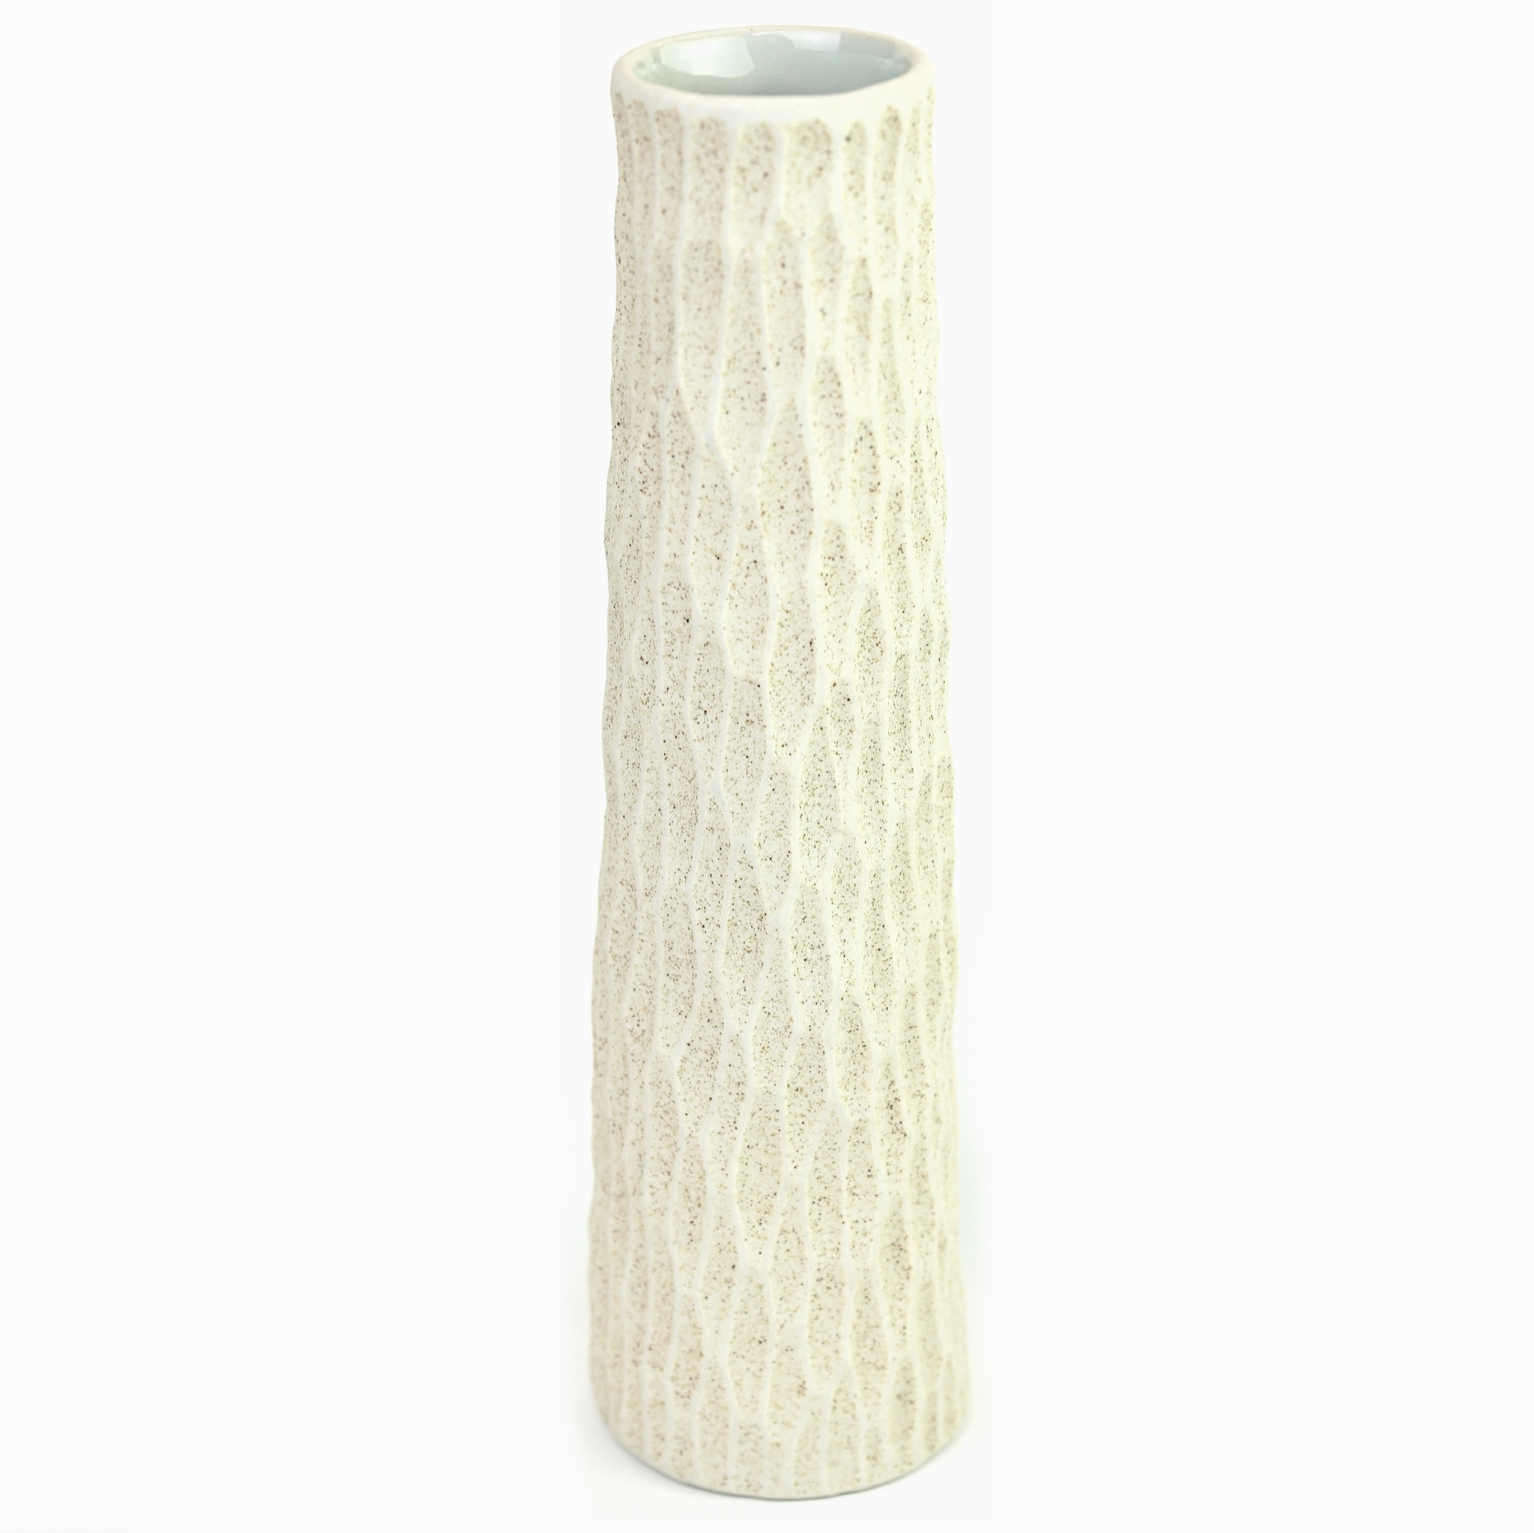 Handmade Long Coral Bud Vase, White Coral